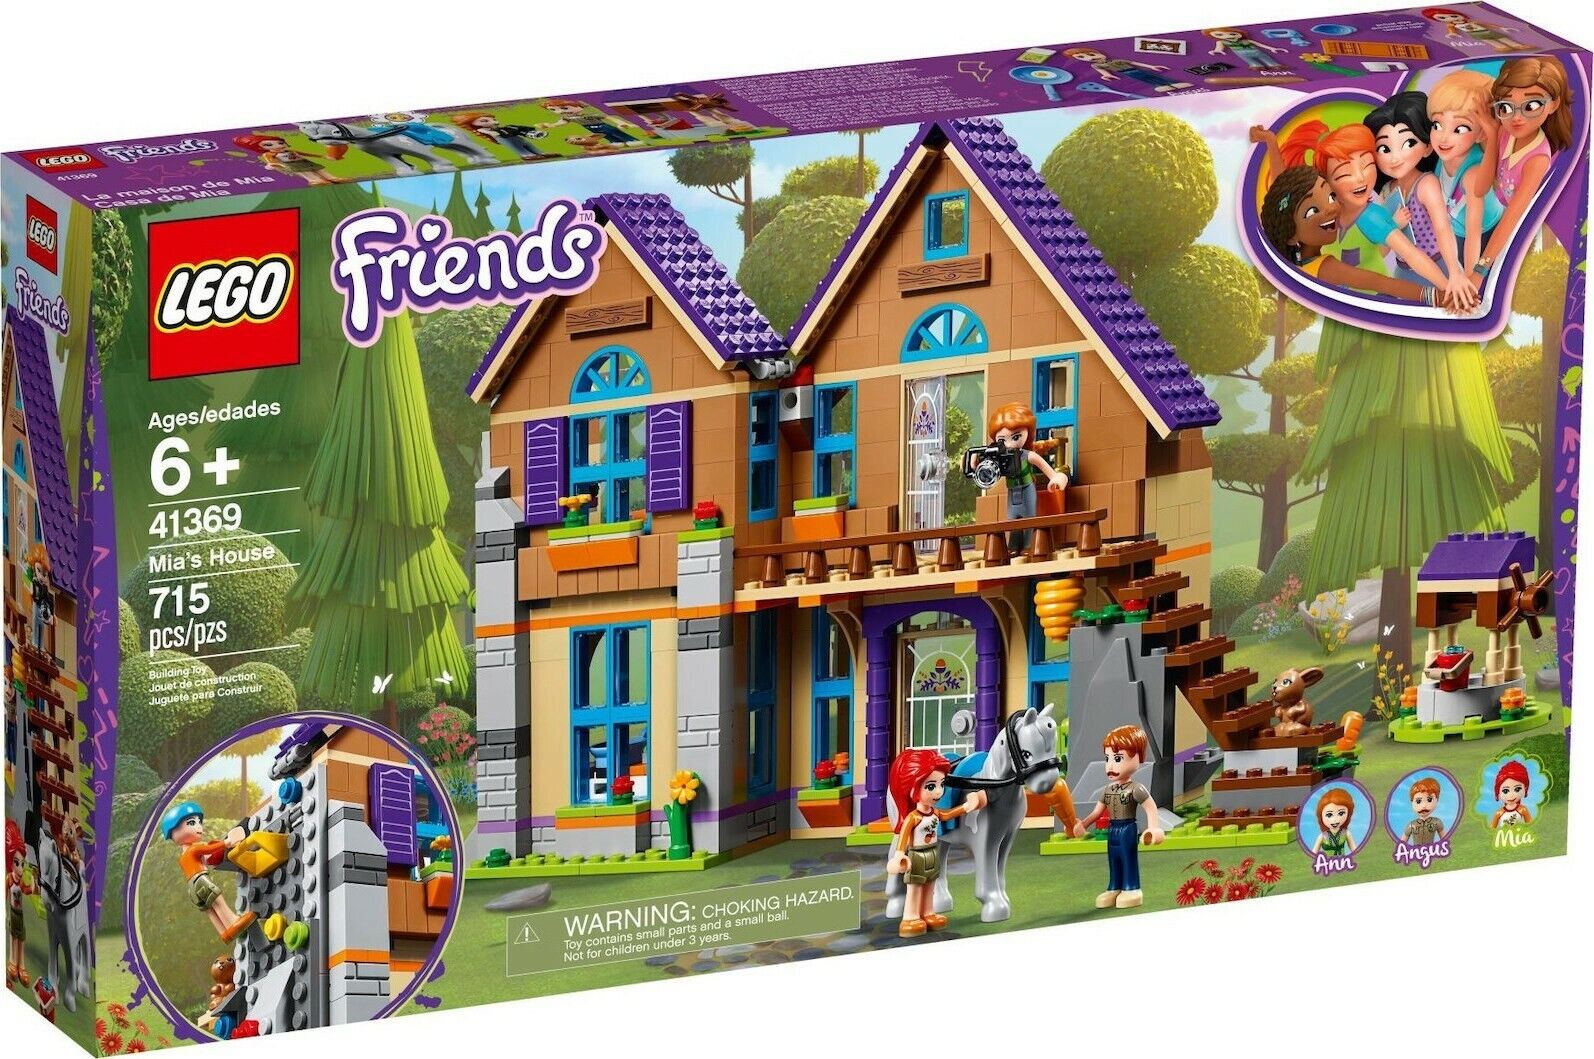 LEGO Friends (41369) Mia's House - 715 pcs - Mia - Ann - Angus - RETIRED